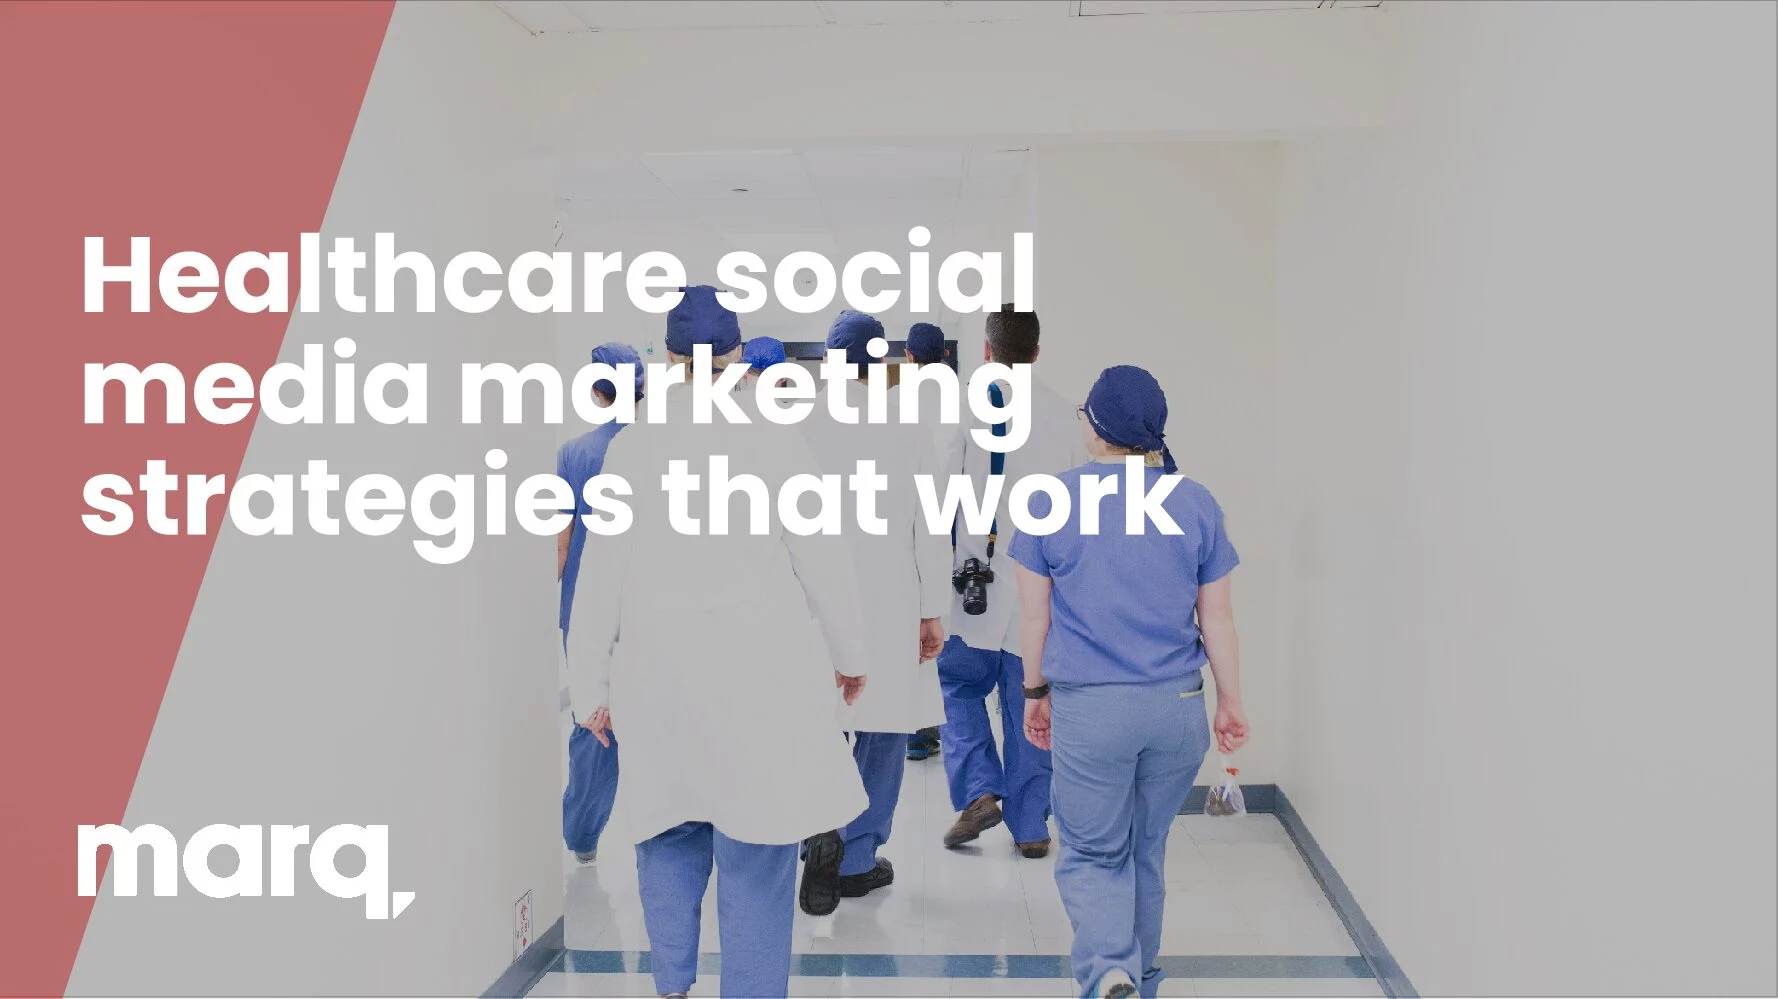 Healthcare social media marketing strategies that work